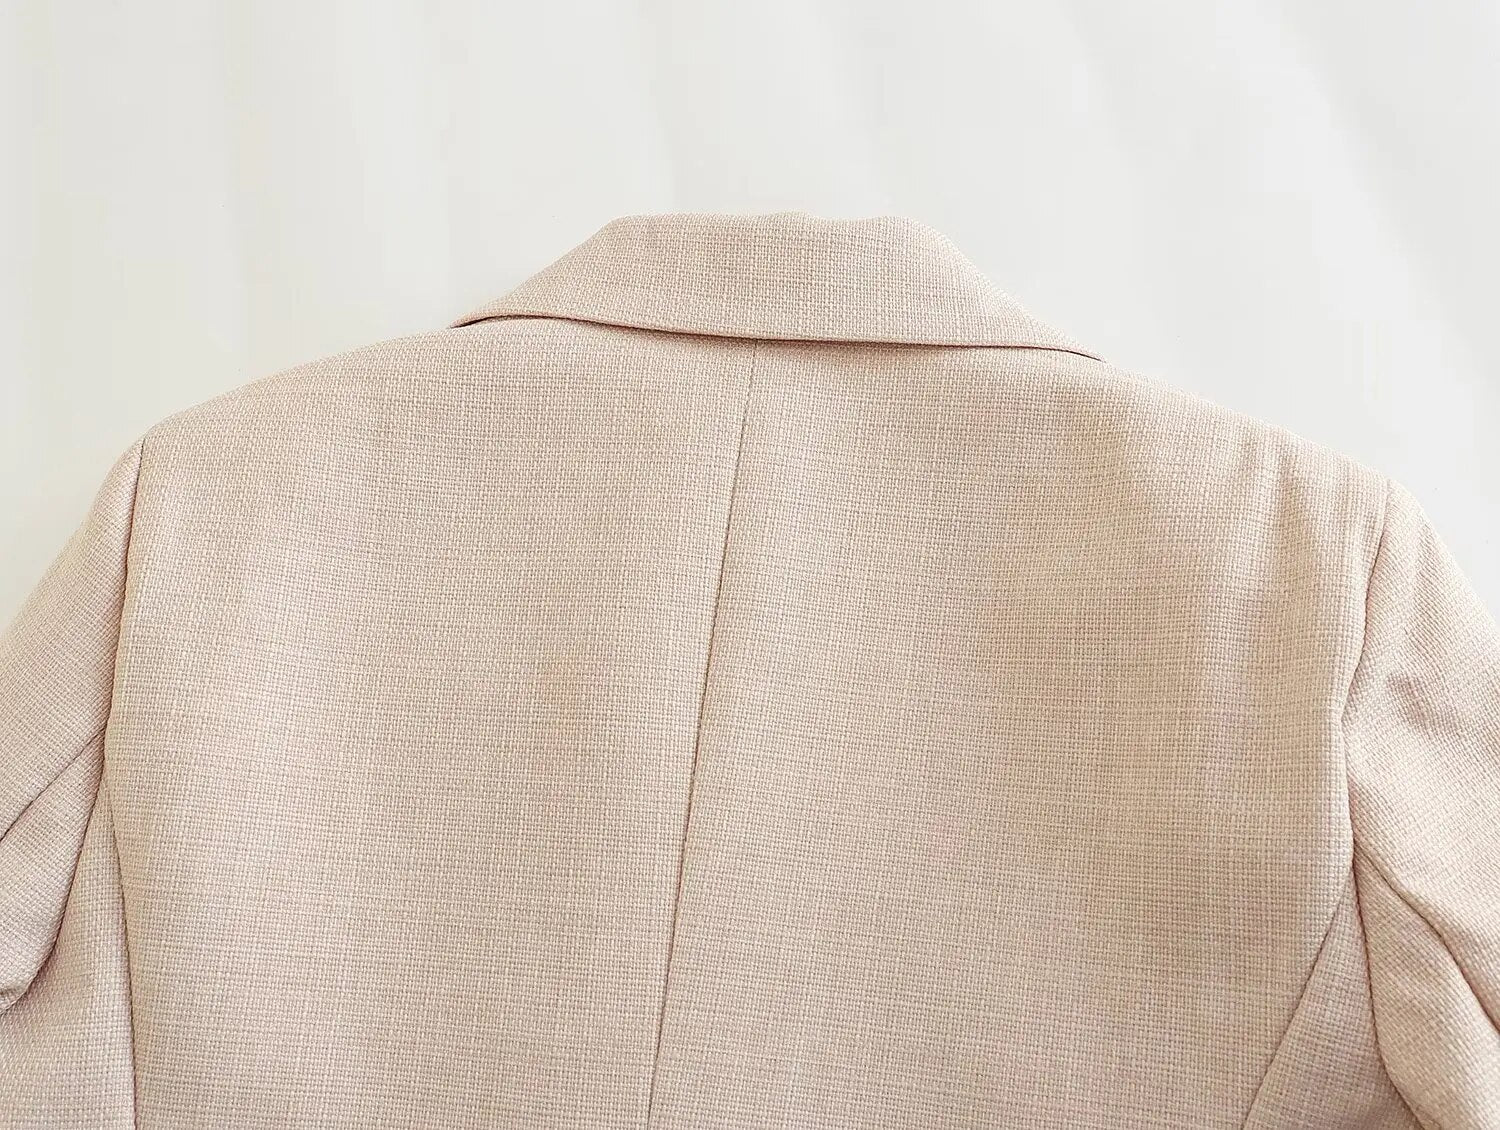 xakxx xakxx - New Women's Temperament Fashion Casual Ruili Retro Women's Texture Double breasted Suit Coat